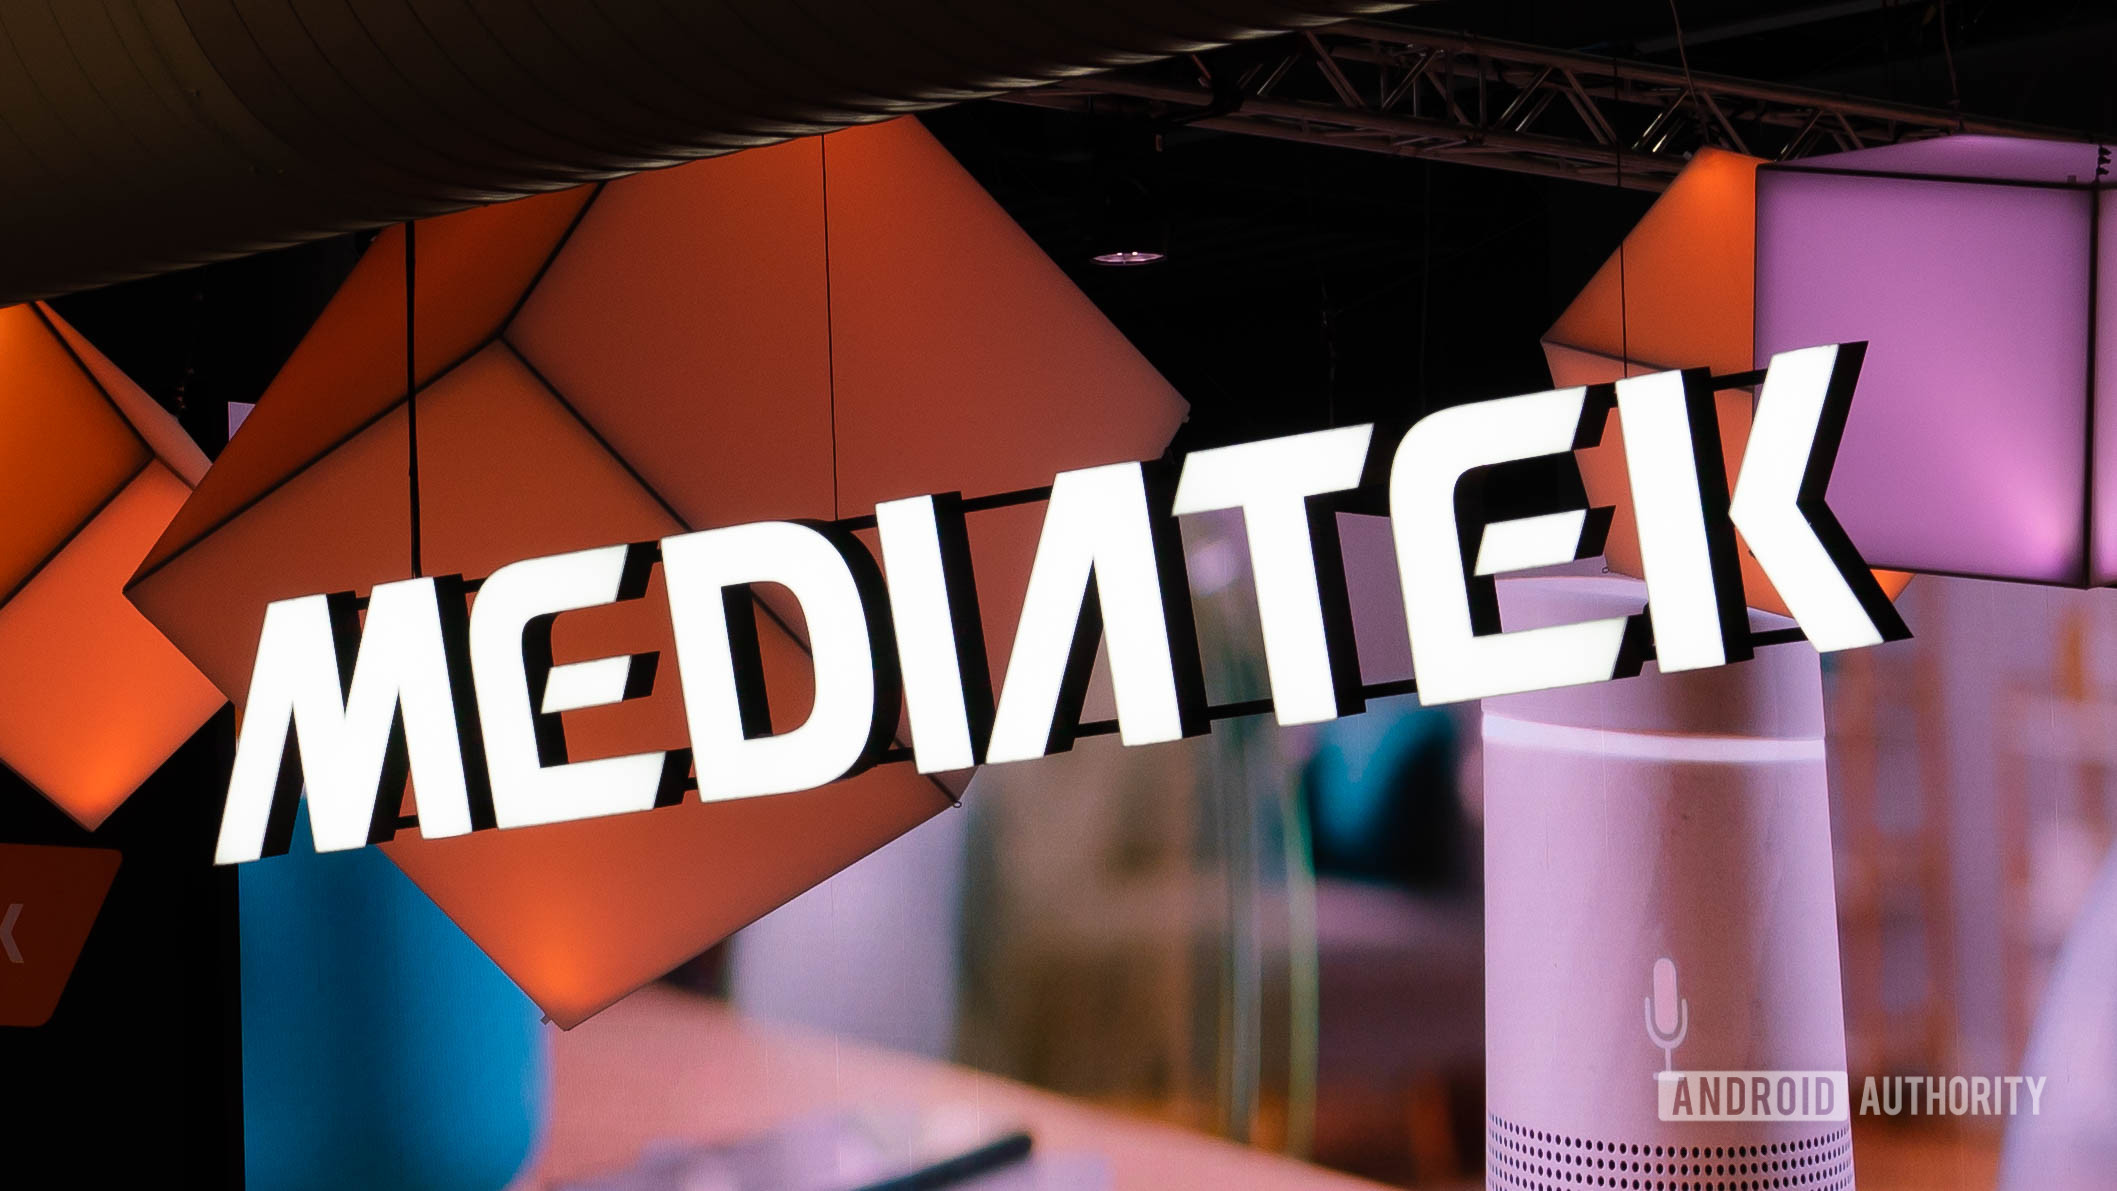 Mediatek logo